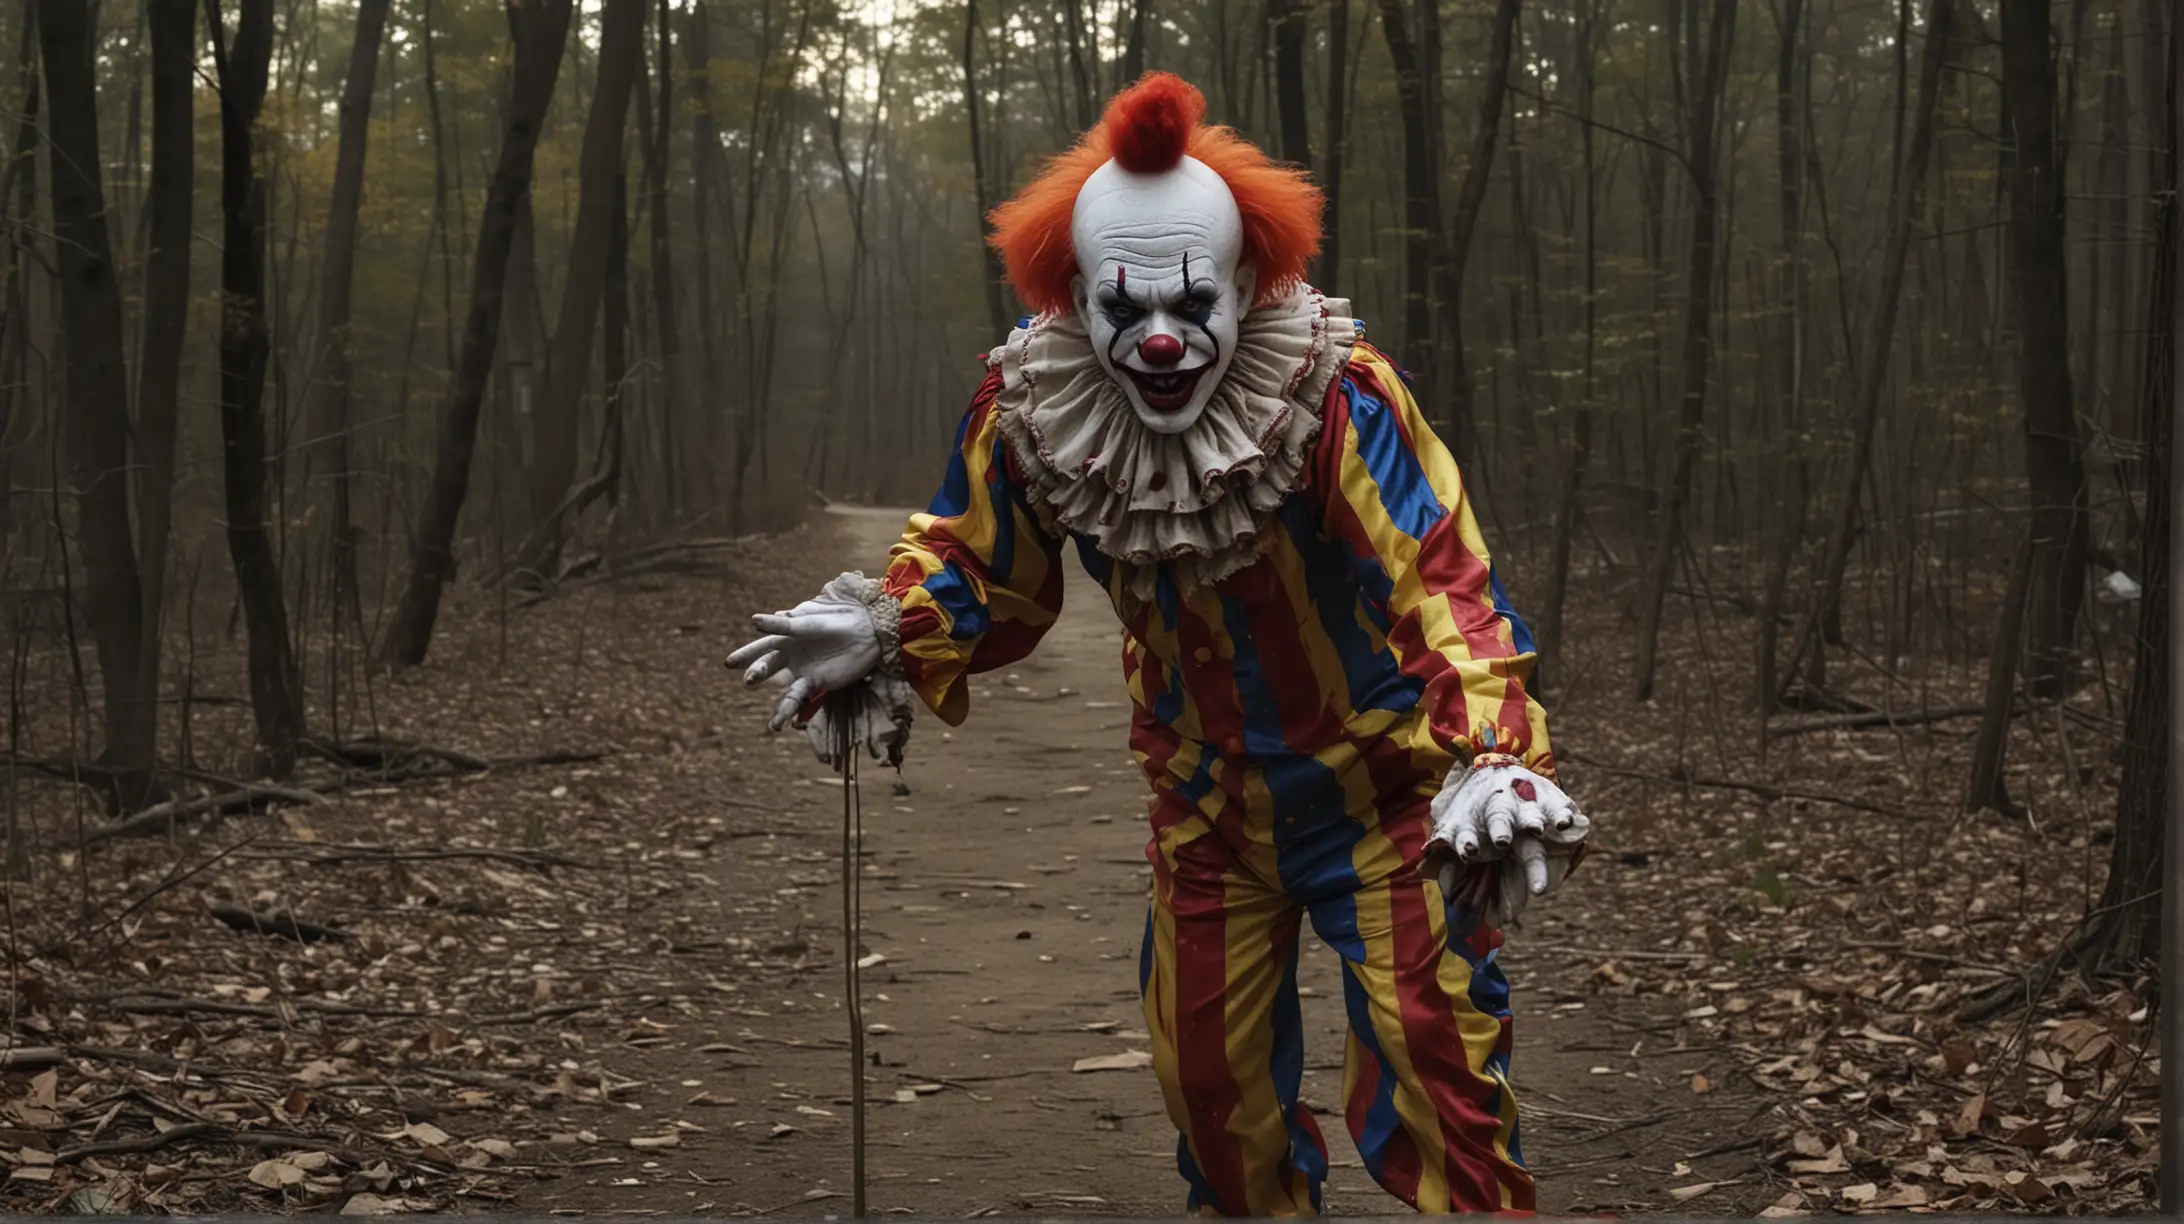 Legendary Killer Clown Hollow Brooks Cautionary Tale